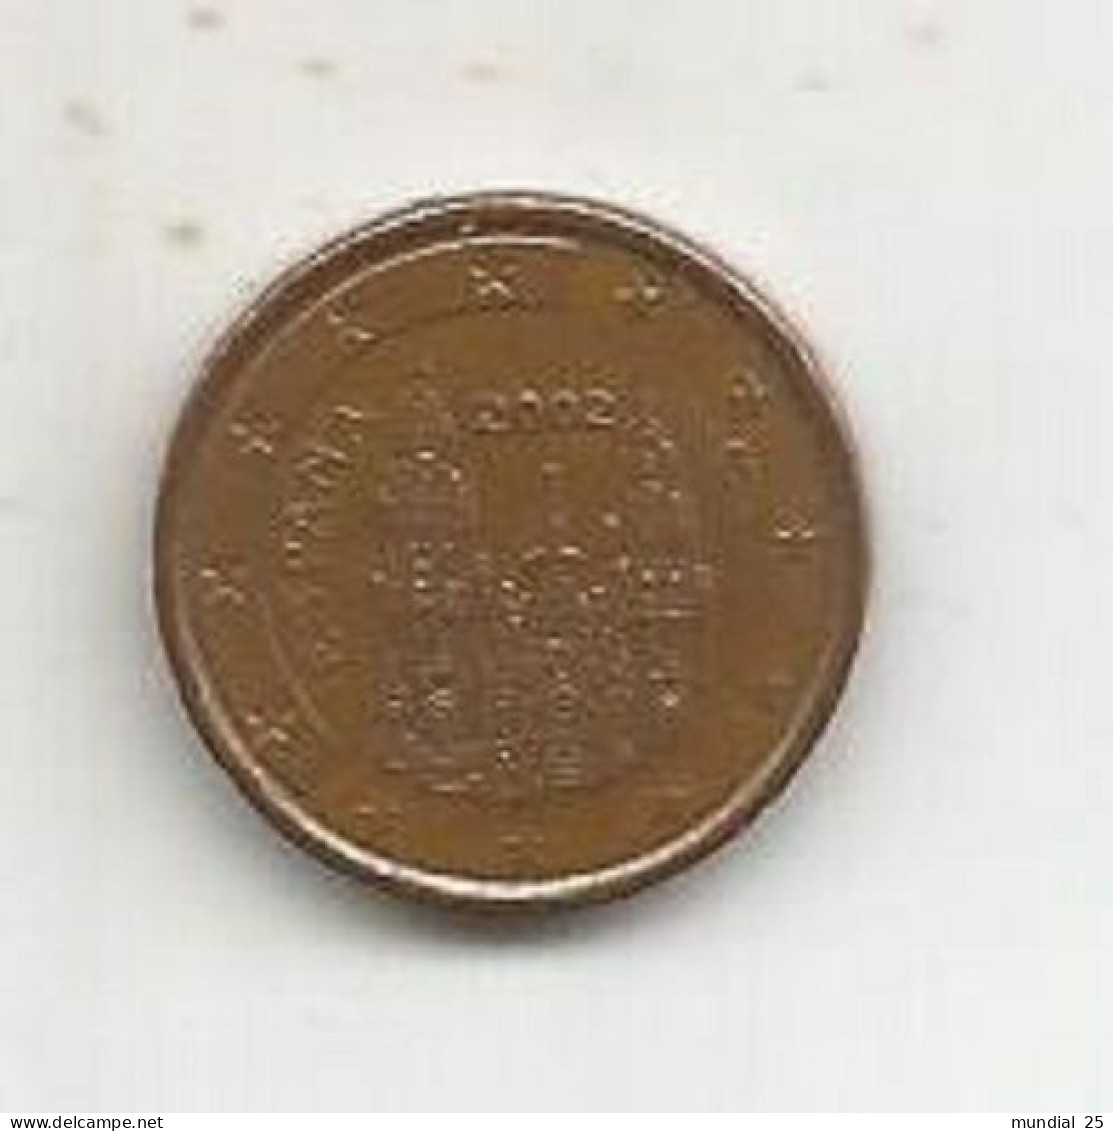 SPAIN 1 EURO CENT 2002 - Espagne